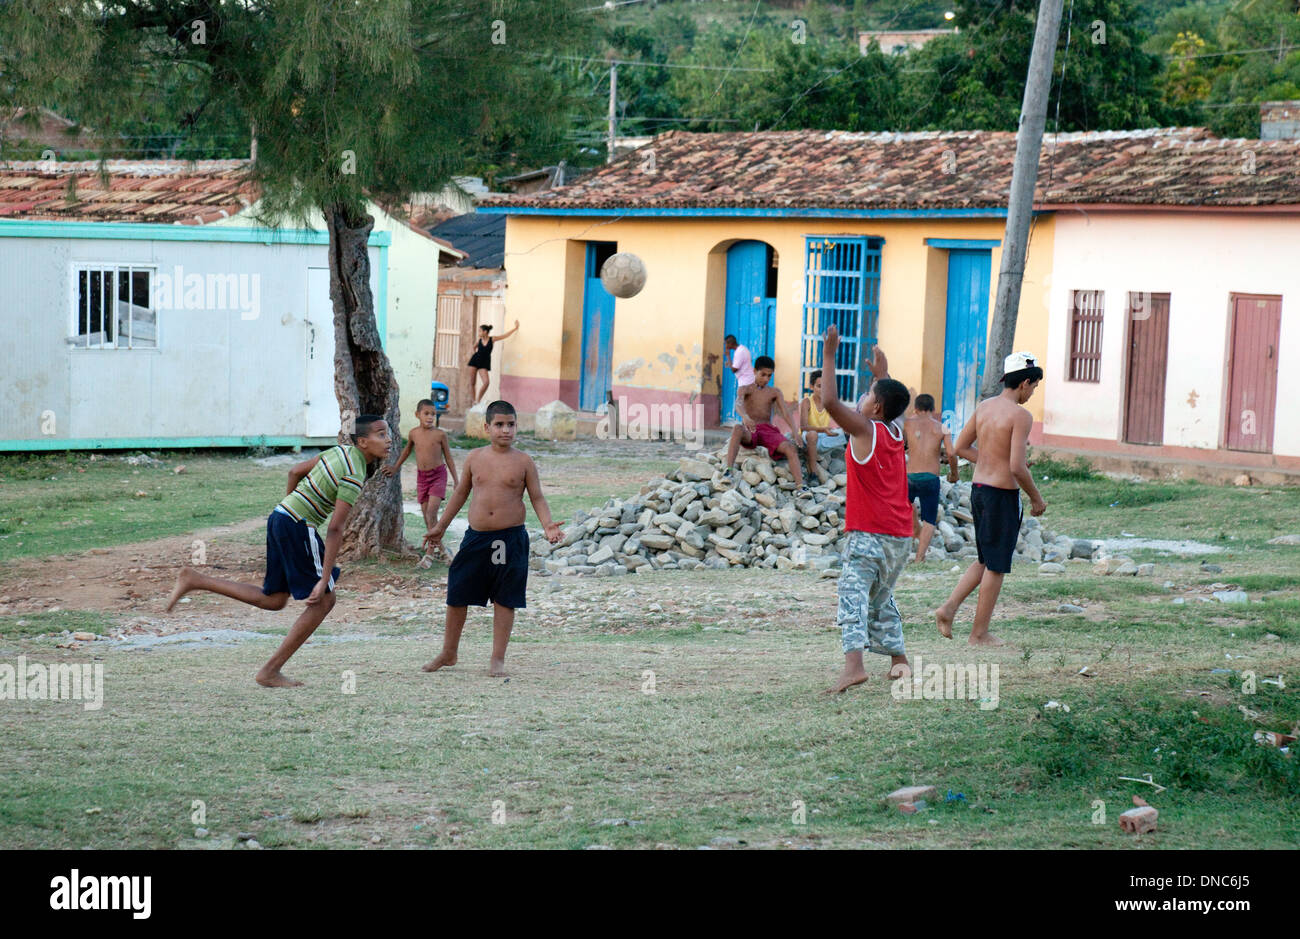 Kinder spielen Fußball, Trinidad, Kuba Karibik Lateinamerika Stockfoto